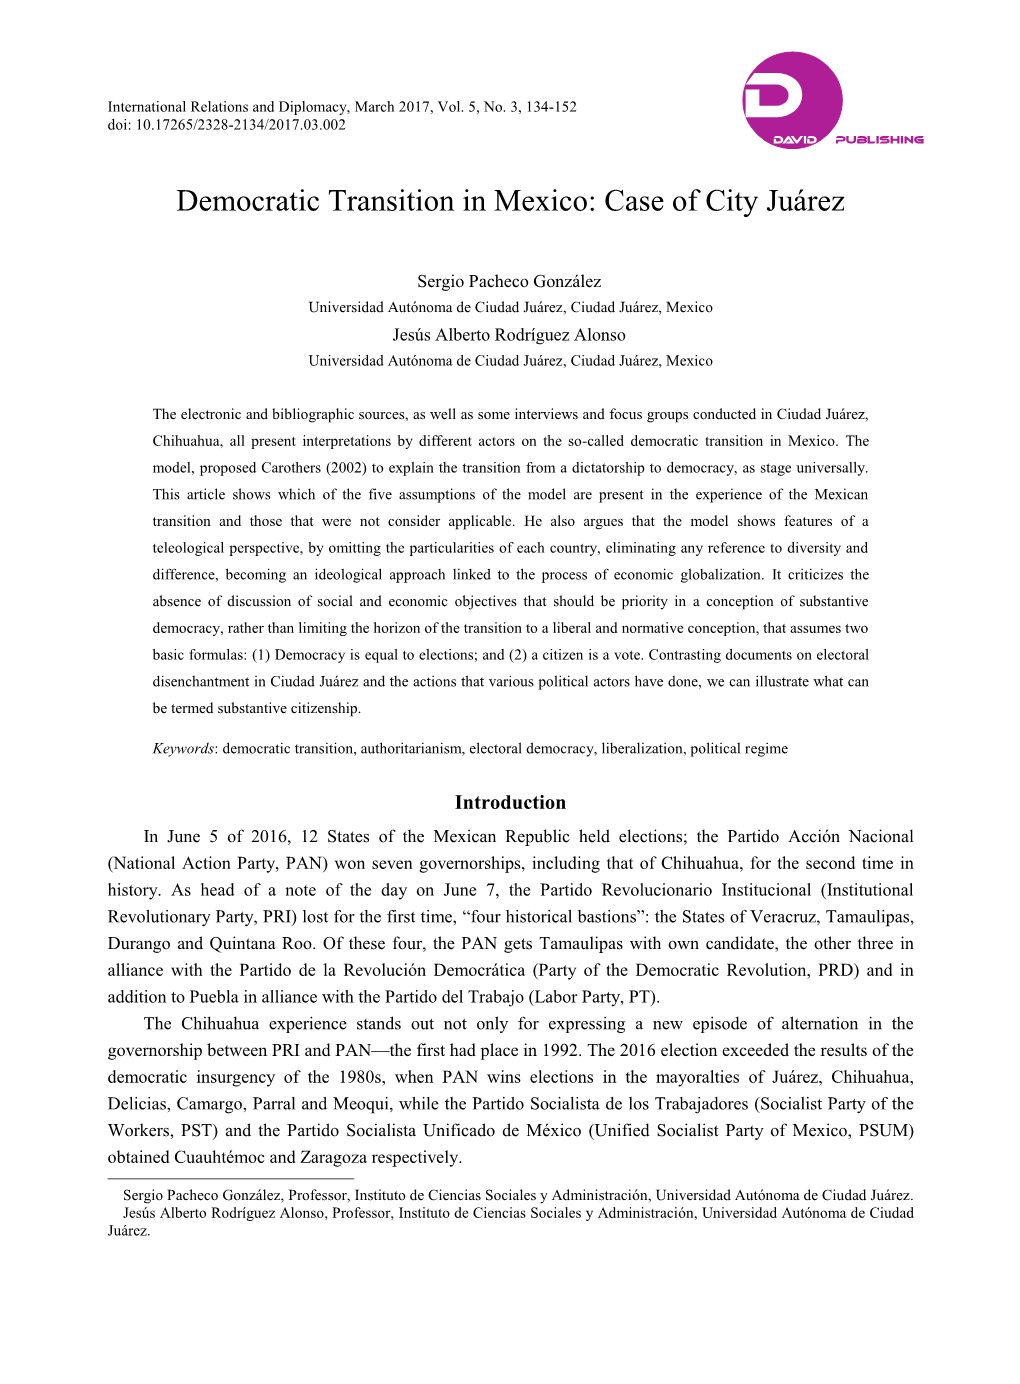 Democratic Transition in Mexico: Case of City Juárez